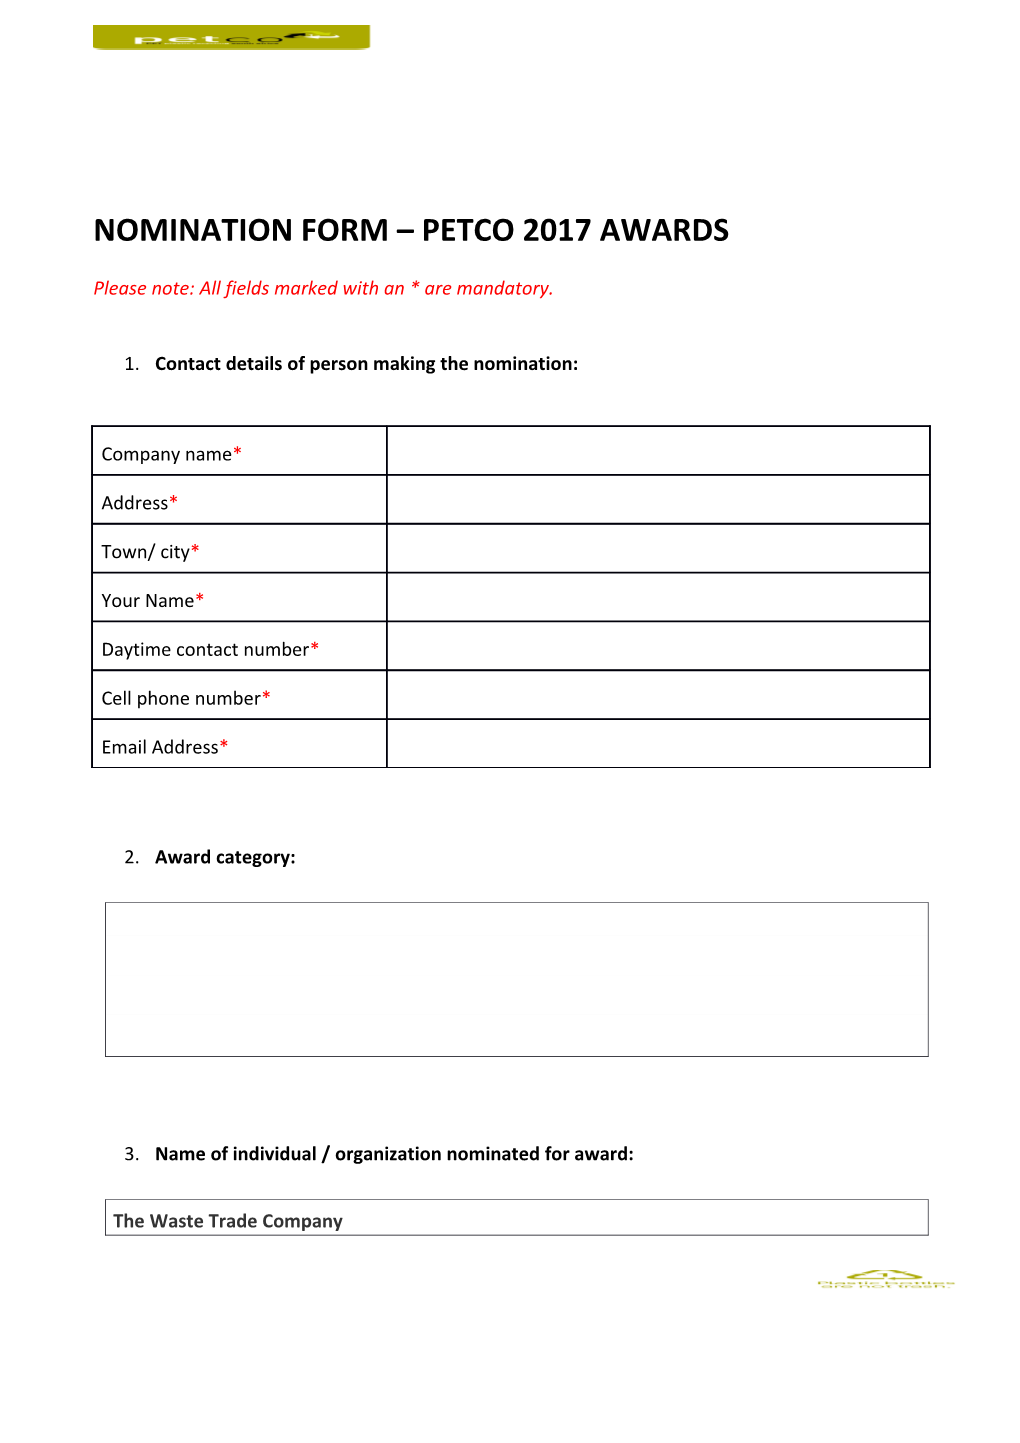 Nomination Form Petco 2017 Awards